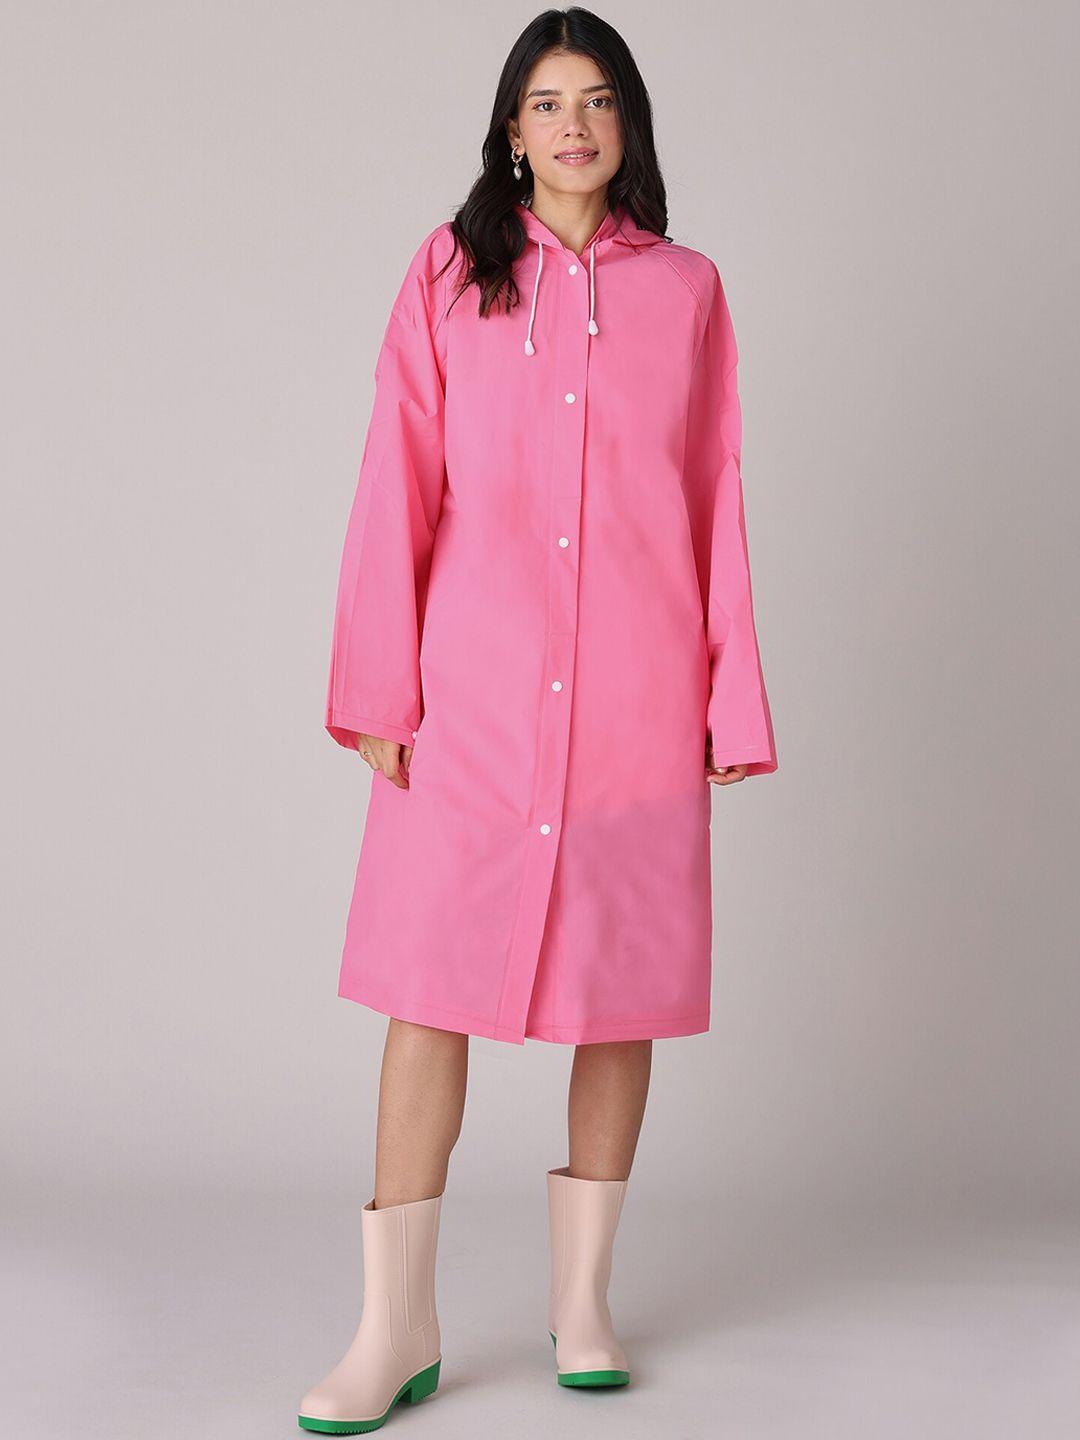 20dresses pink hooded knee length rain jacket